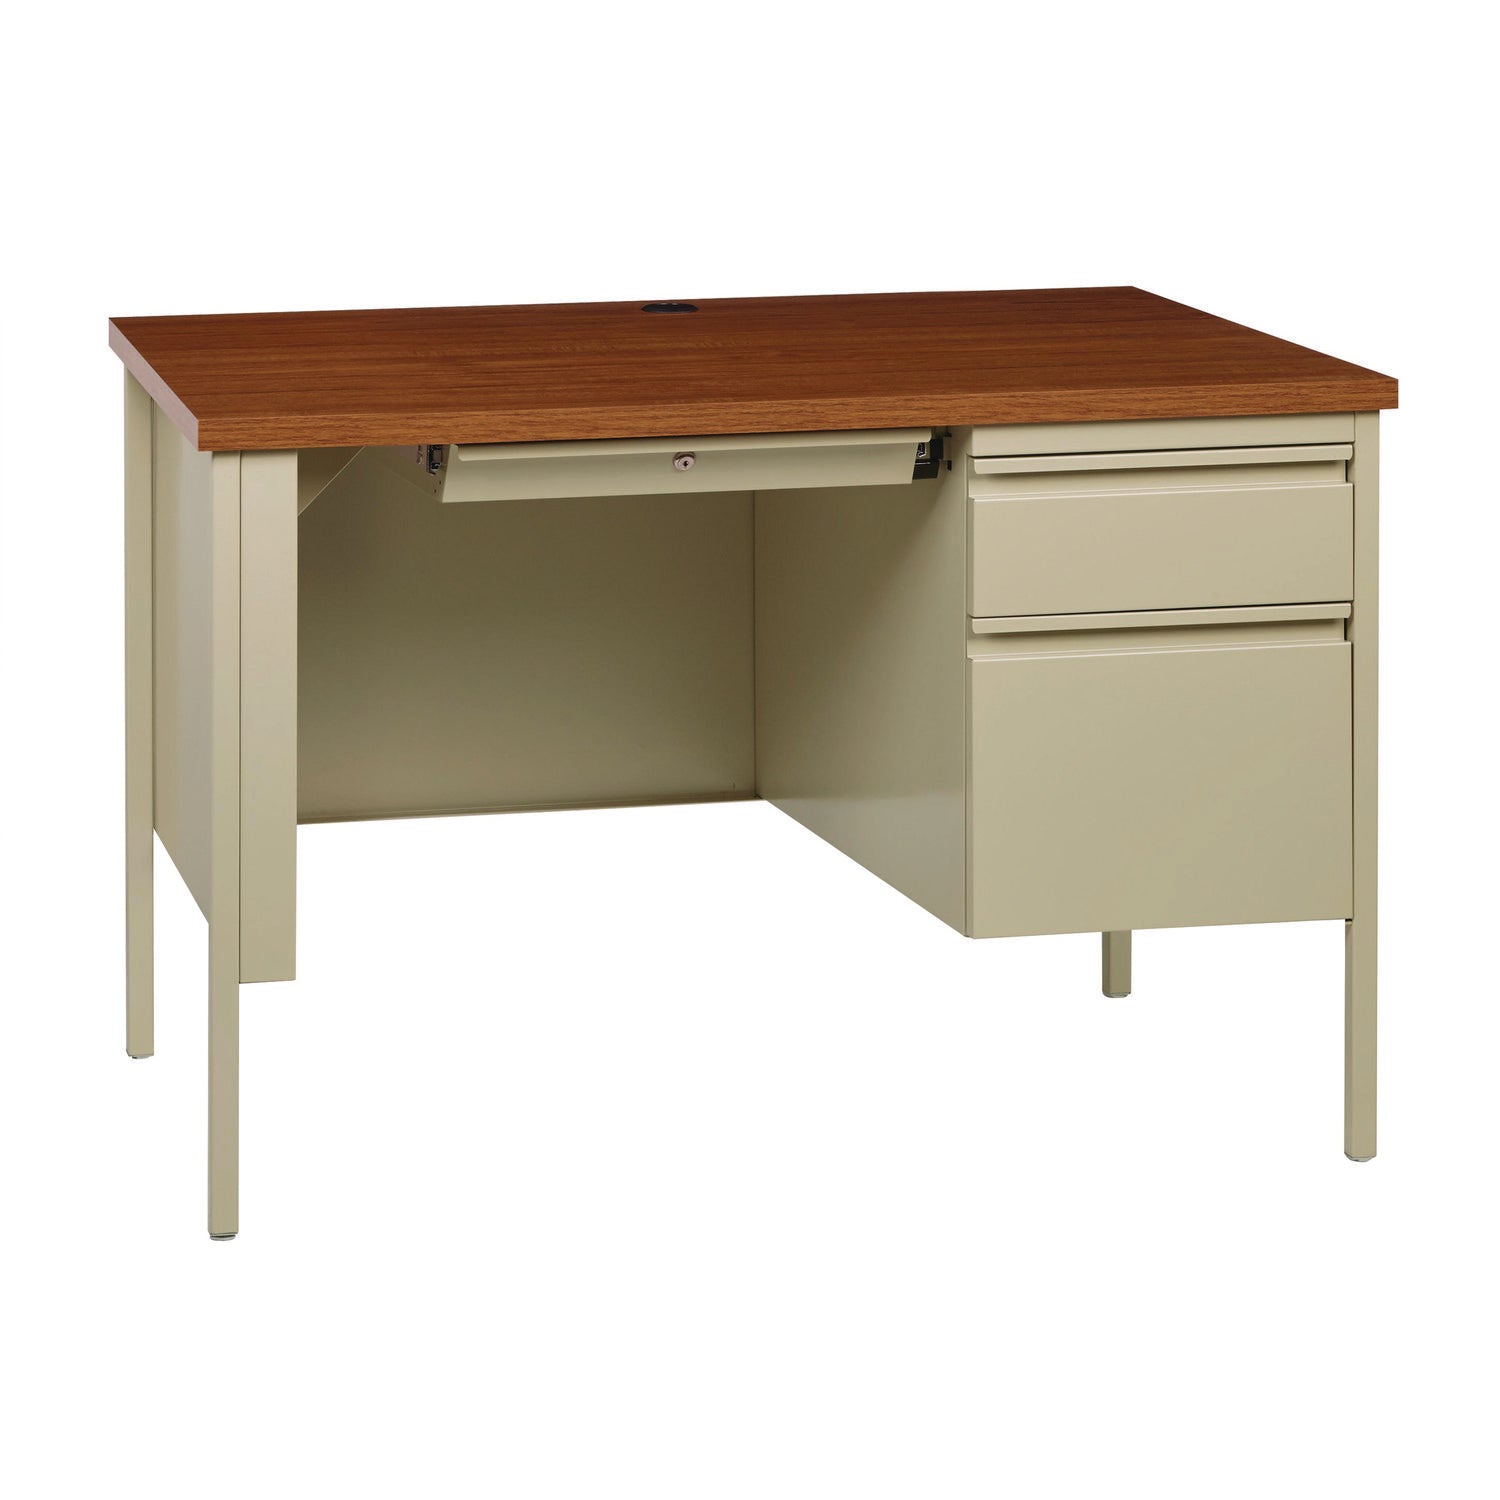 single-pedestal-steel-desk-45-x-24-x-295-cherry-putty_alehsd4524pc - 5